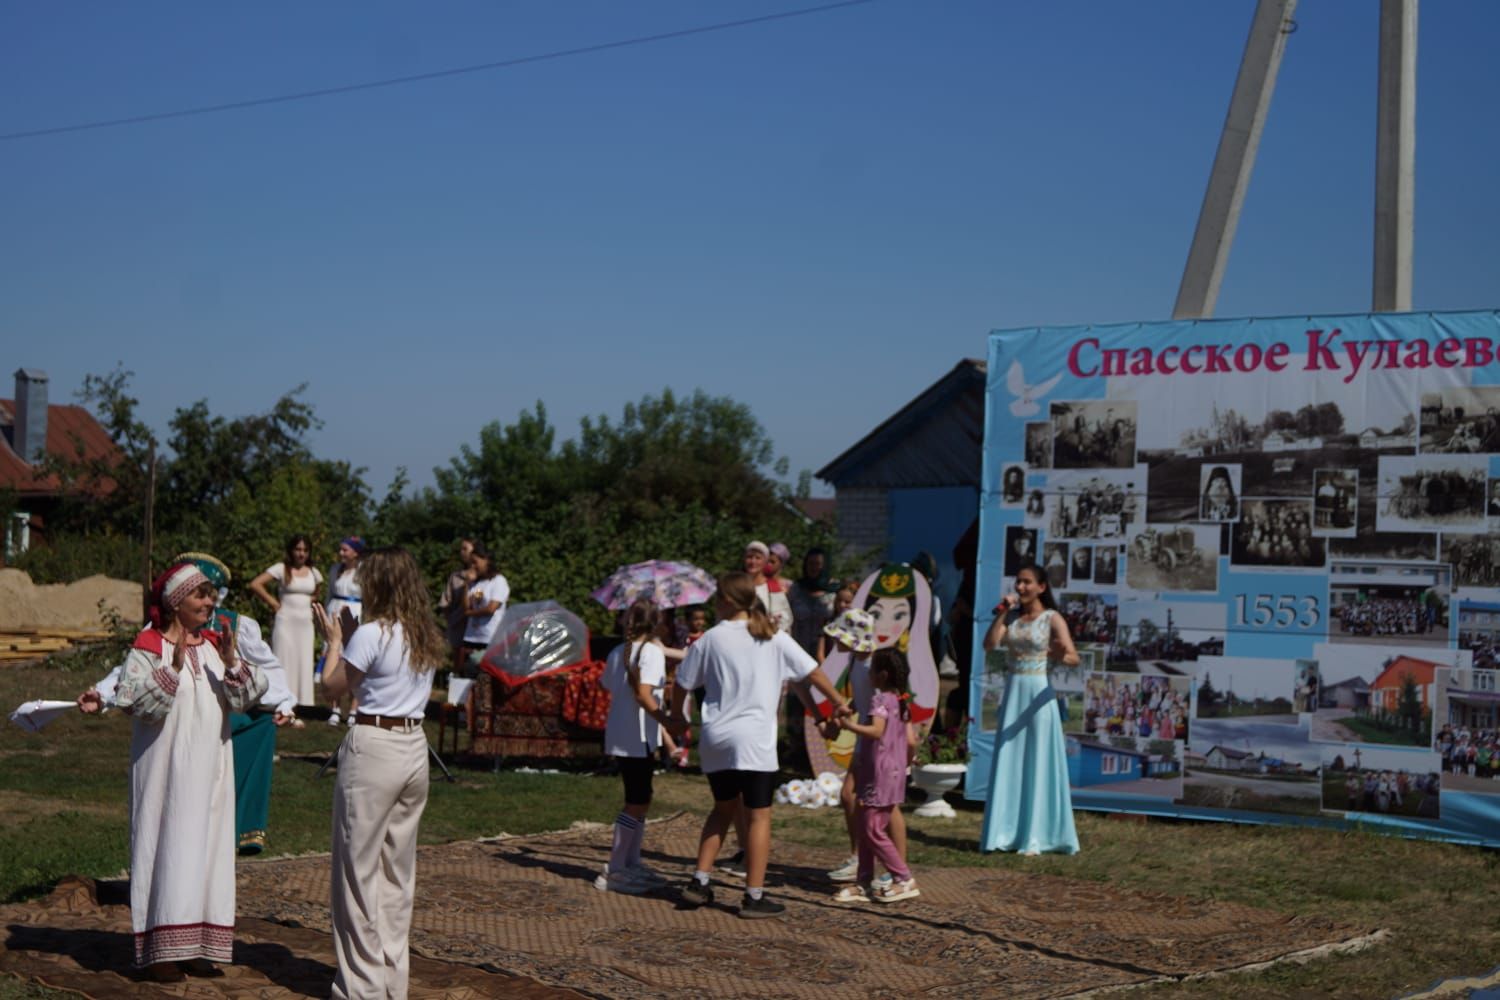 Праздник села в Кулаево